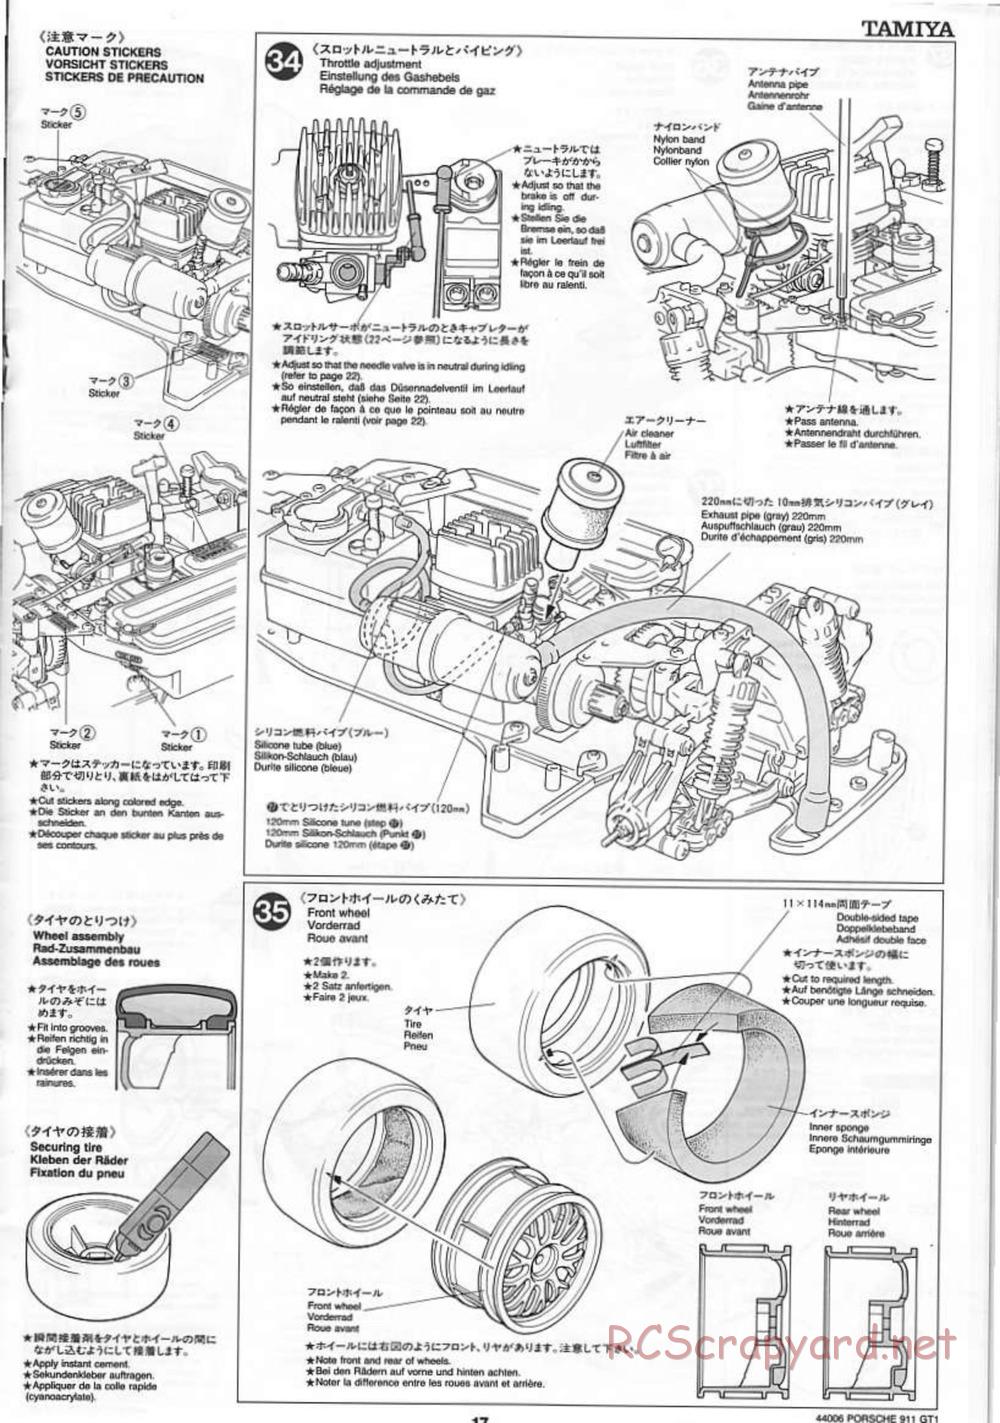 Tamiya - Porsche 911 GT1 - TGX Mk.1 Chassis - Manual - Page 17